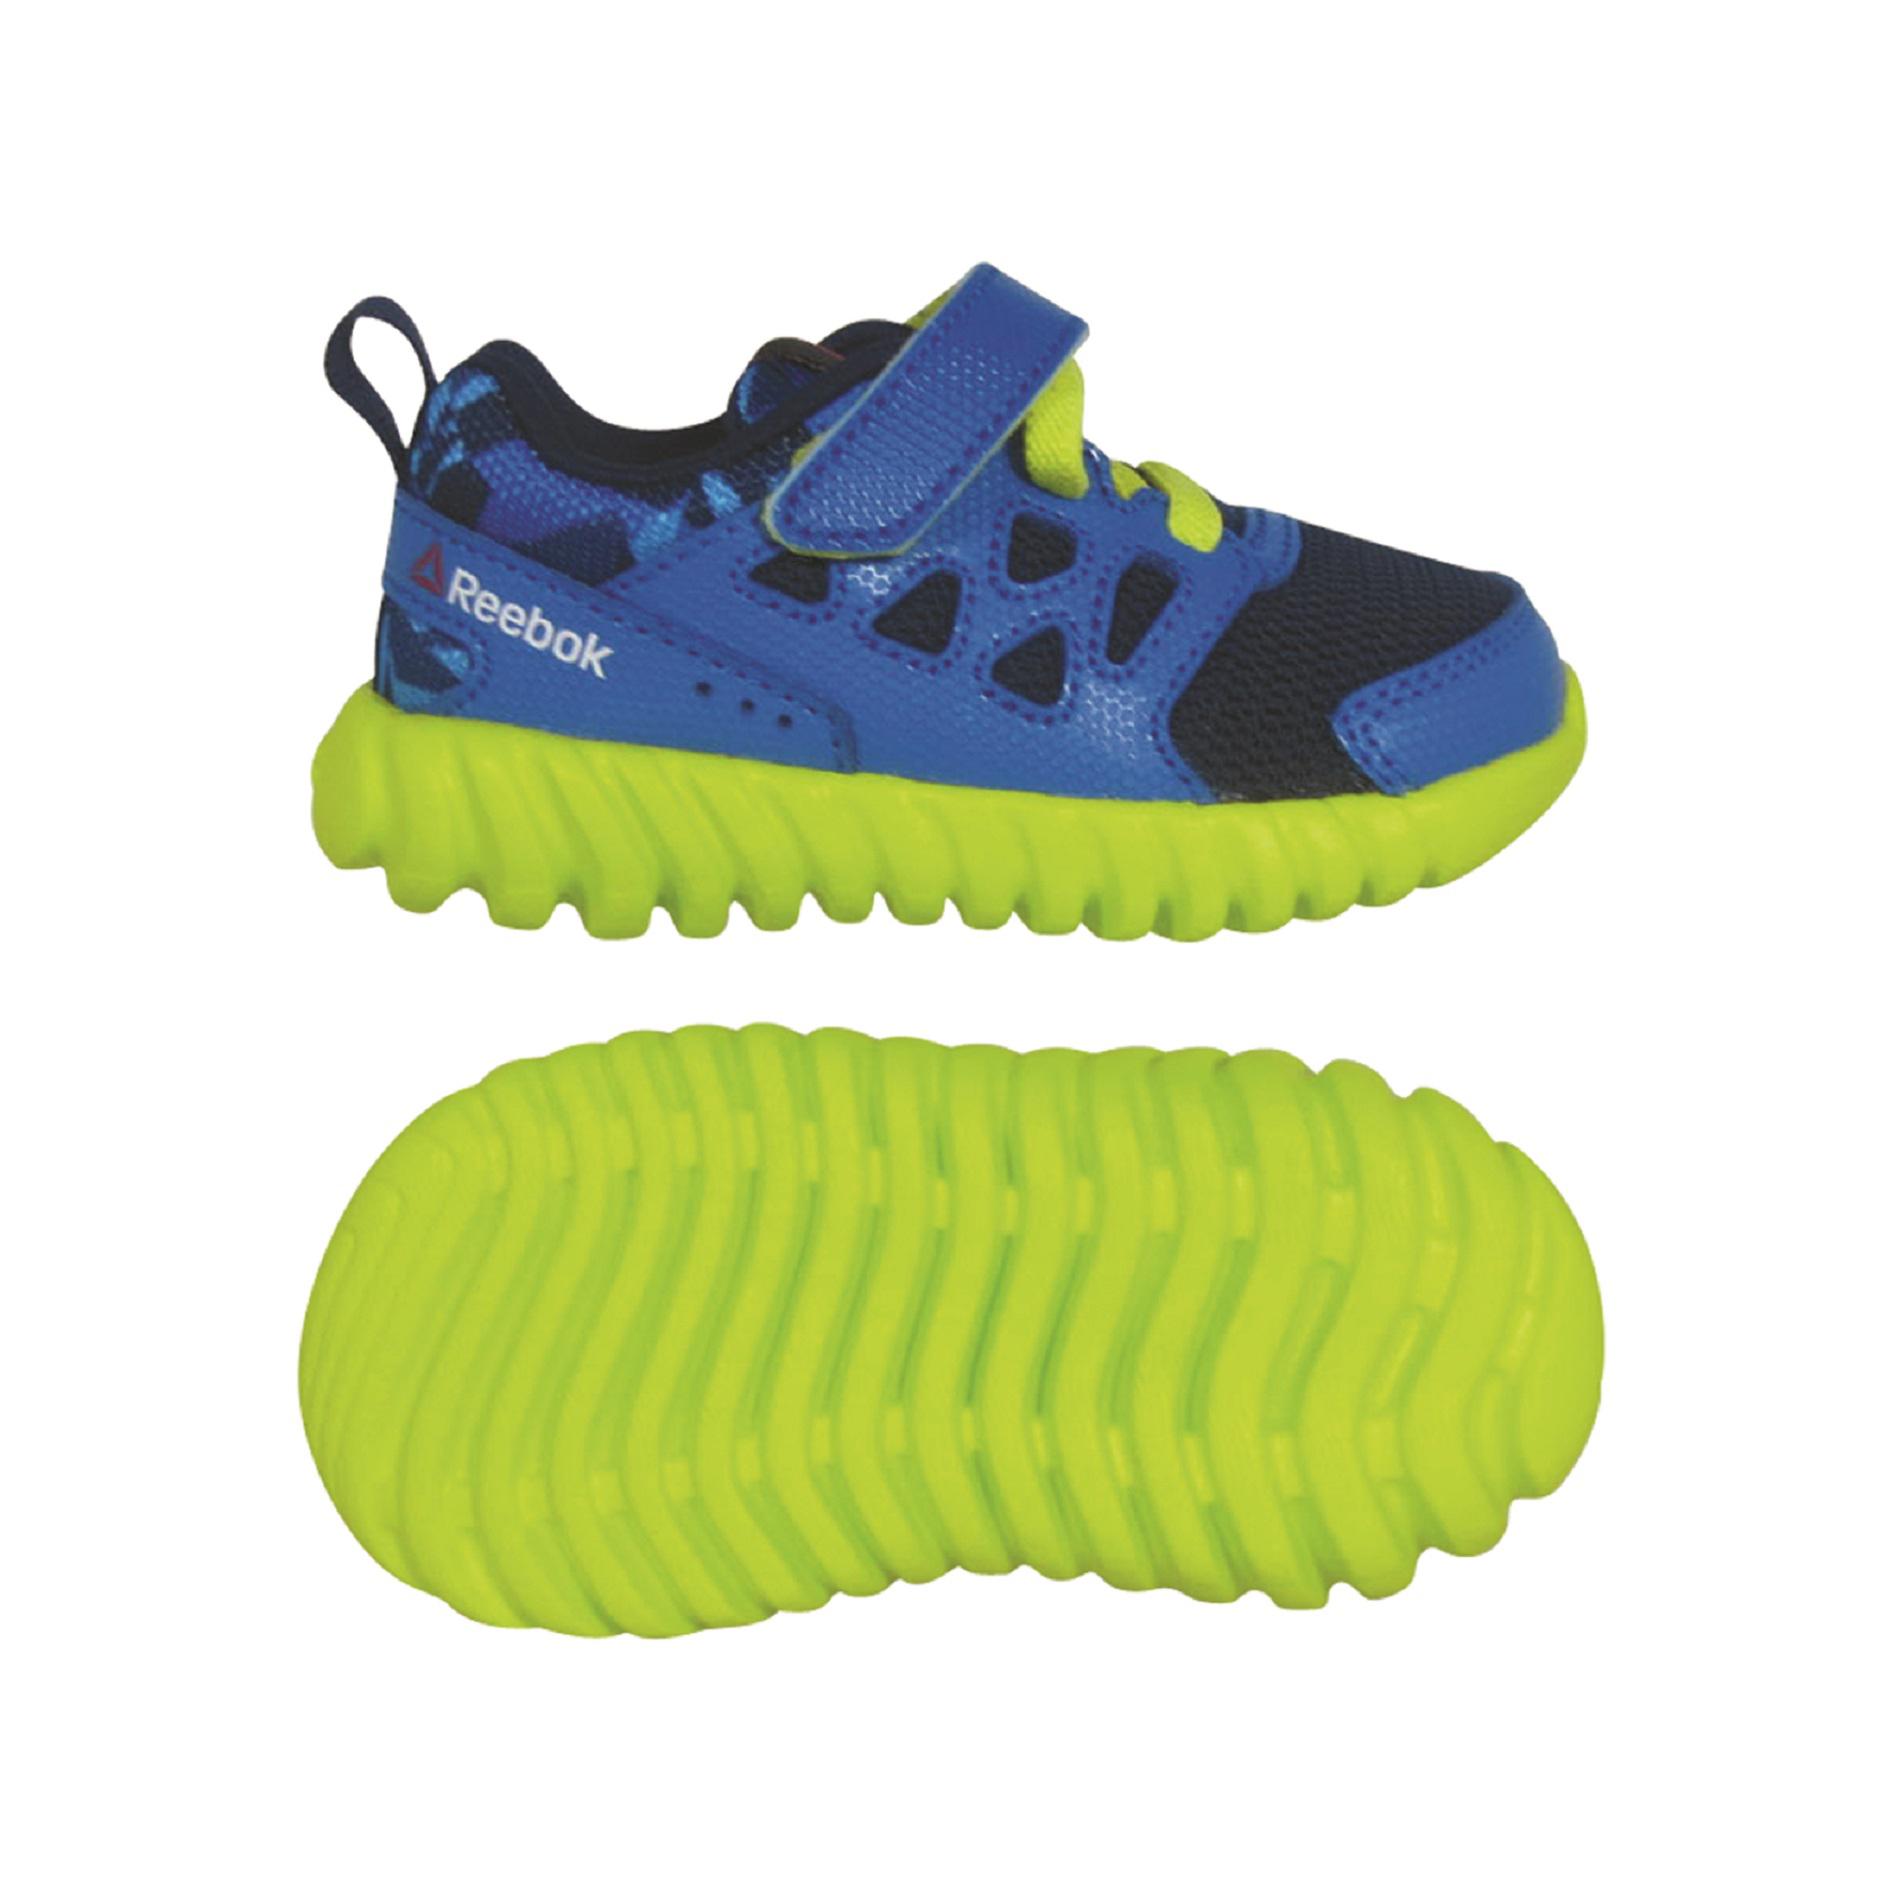 Reebok Toddler Boy's TwistForm Blaze 2.0 Blue/Green Athletic Shoe